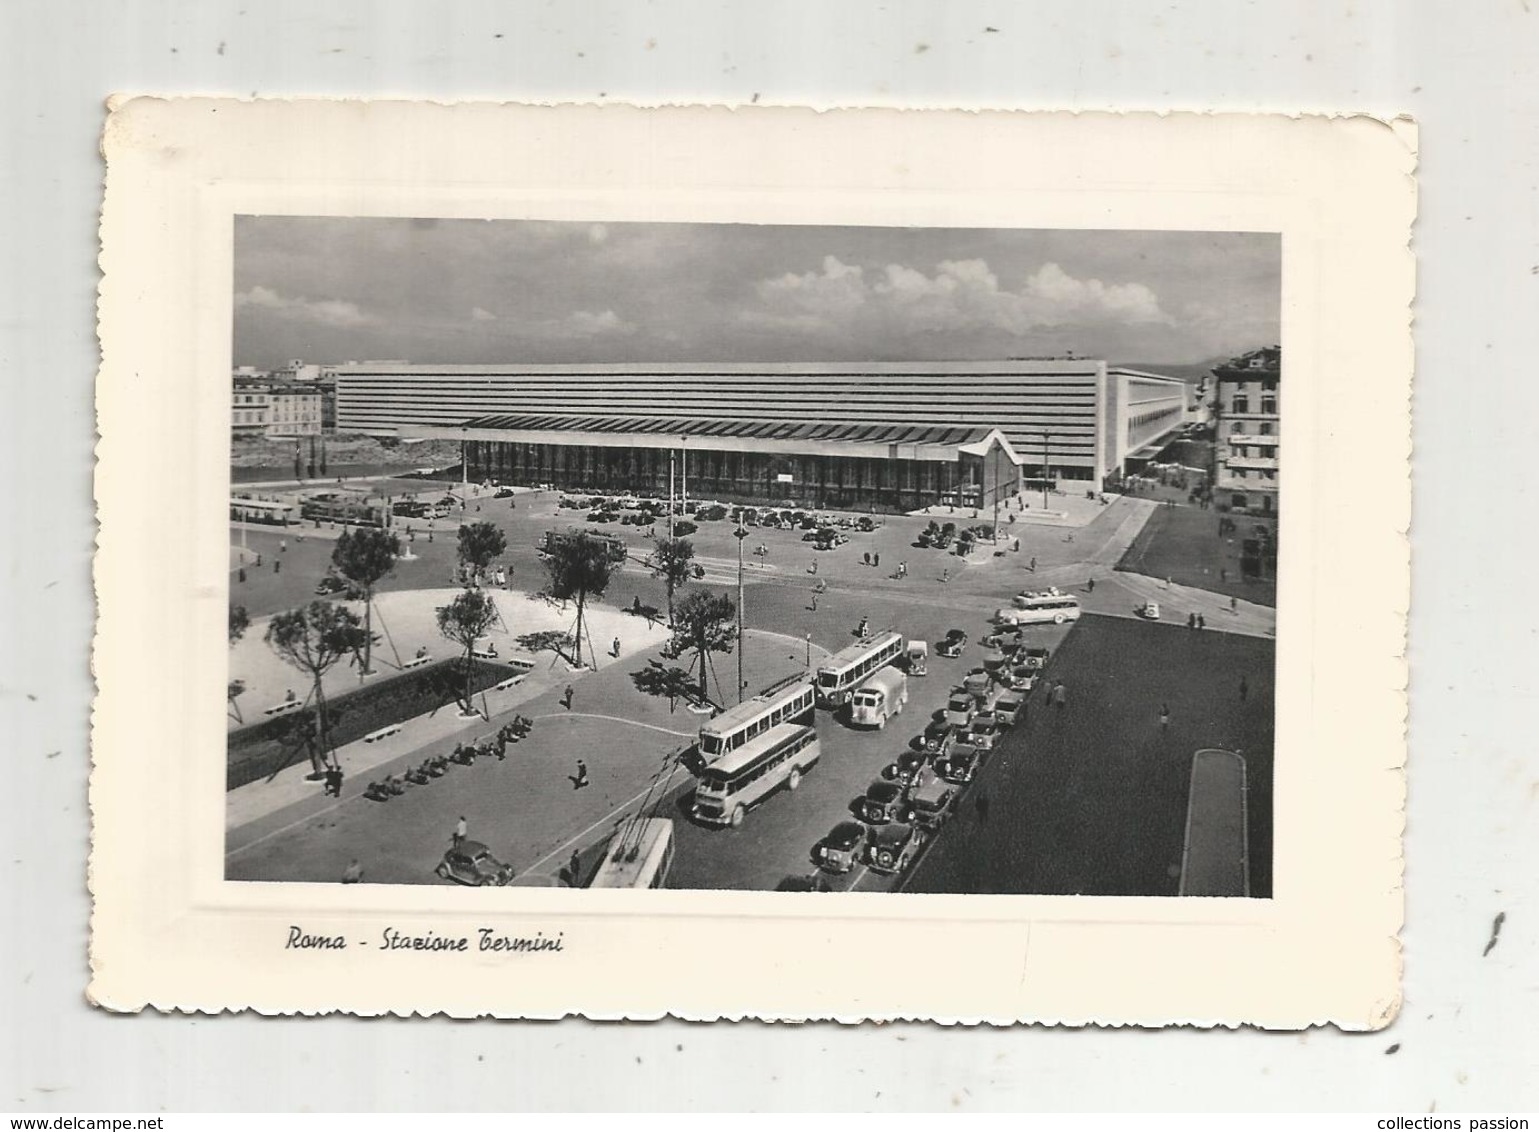 Cp, Automobiles , Bus & Autocars , Italie , ROMA , Stazione Termini , Place De La Gare , Voyagée 1956 - Bus & Autocars